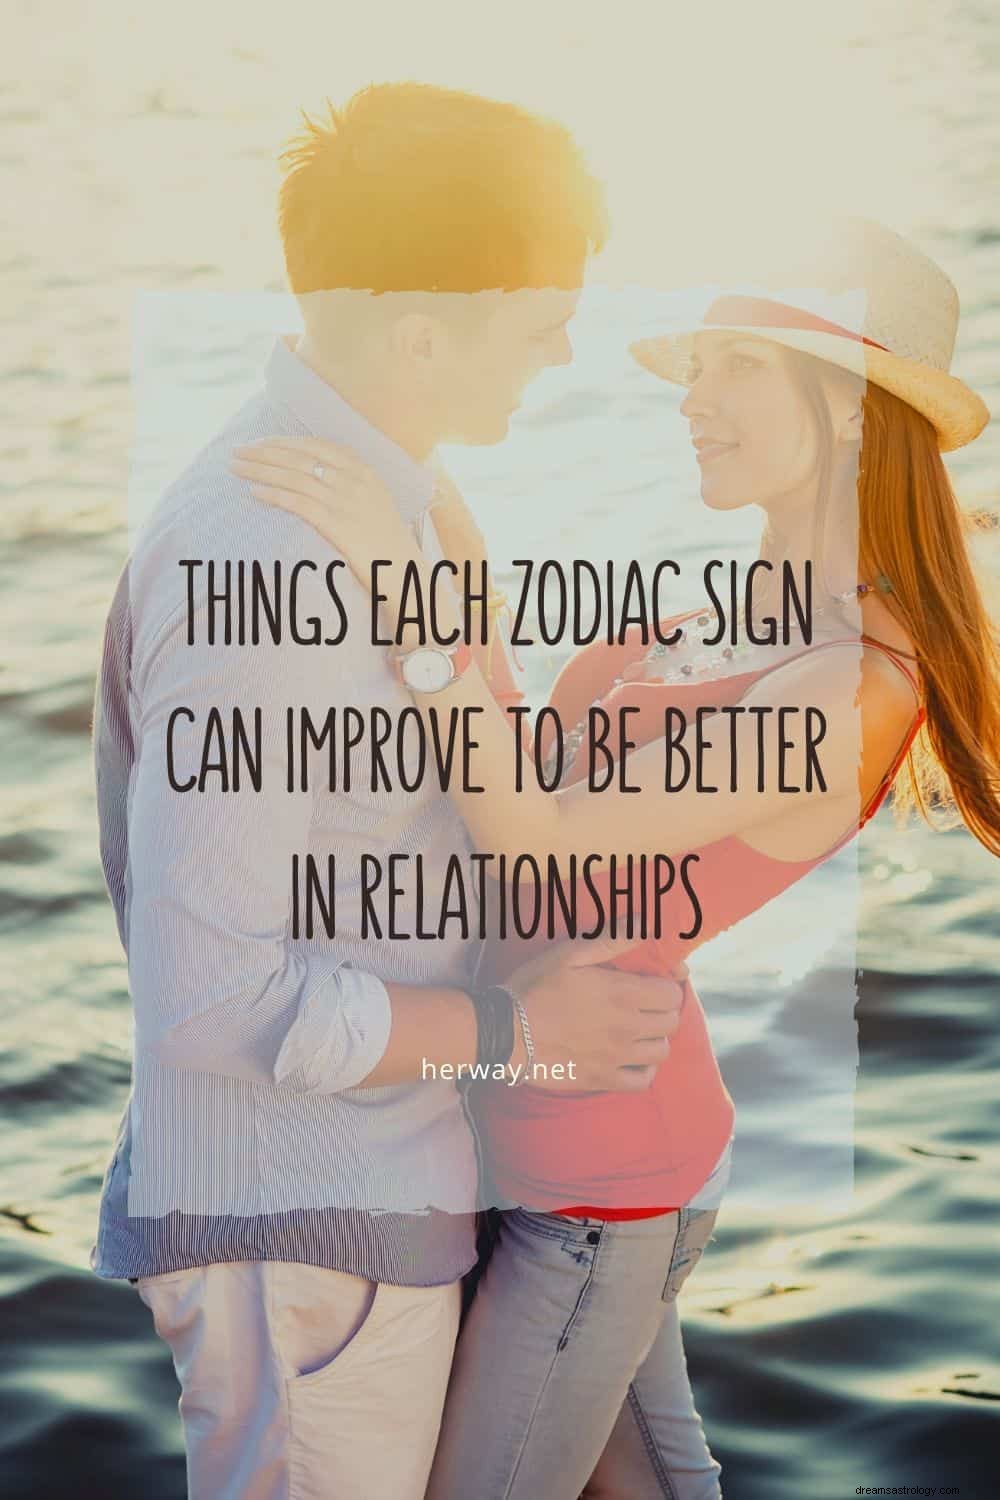 Hal yang Dapat Ditingkatkan Setiap Zodiak Untuk Menjadi Lebih Baik Dalam Hubungan